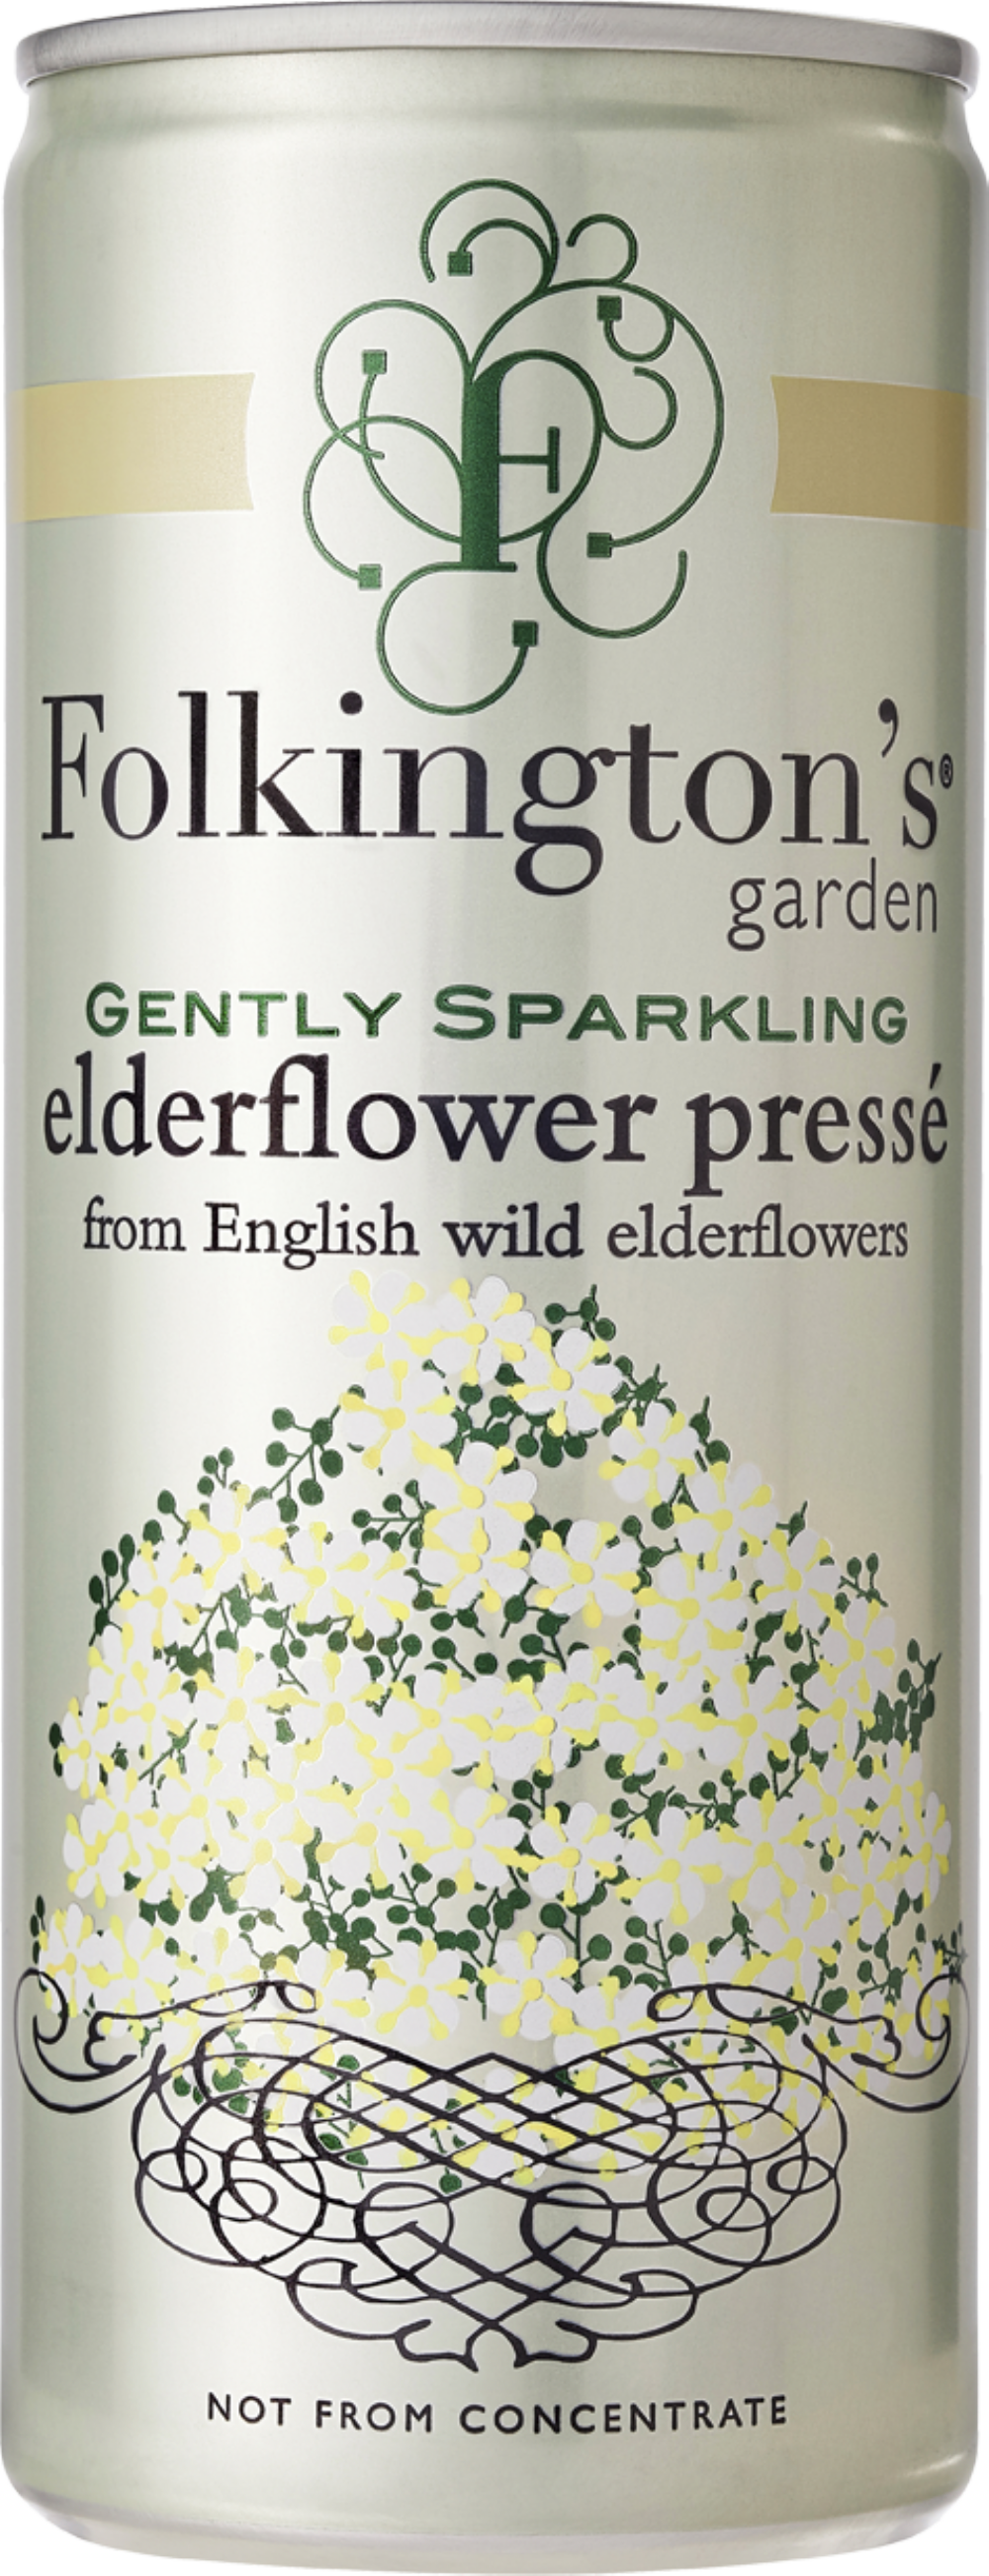 FOLKINGTON'S Gently Sparkling Elderflower Presse Can 250ml